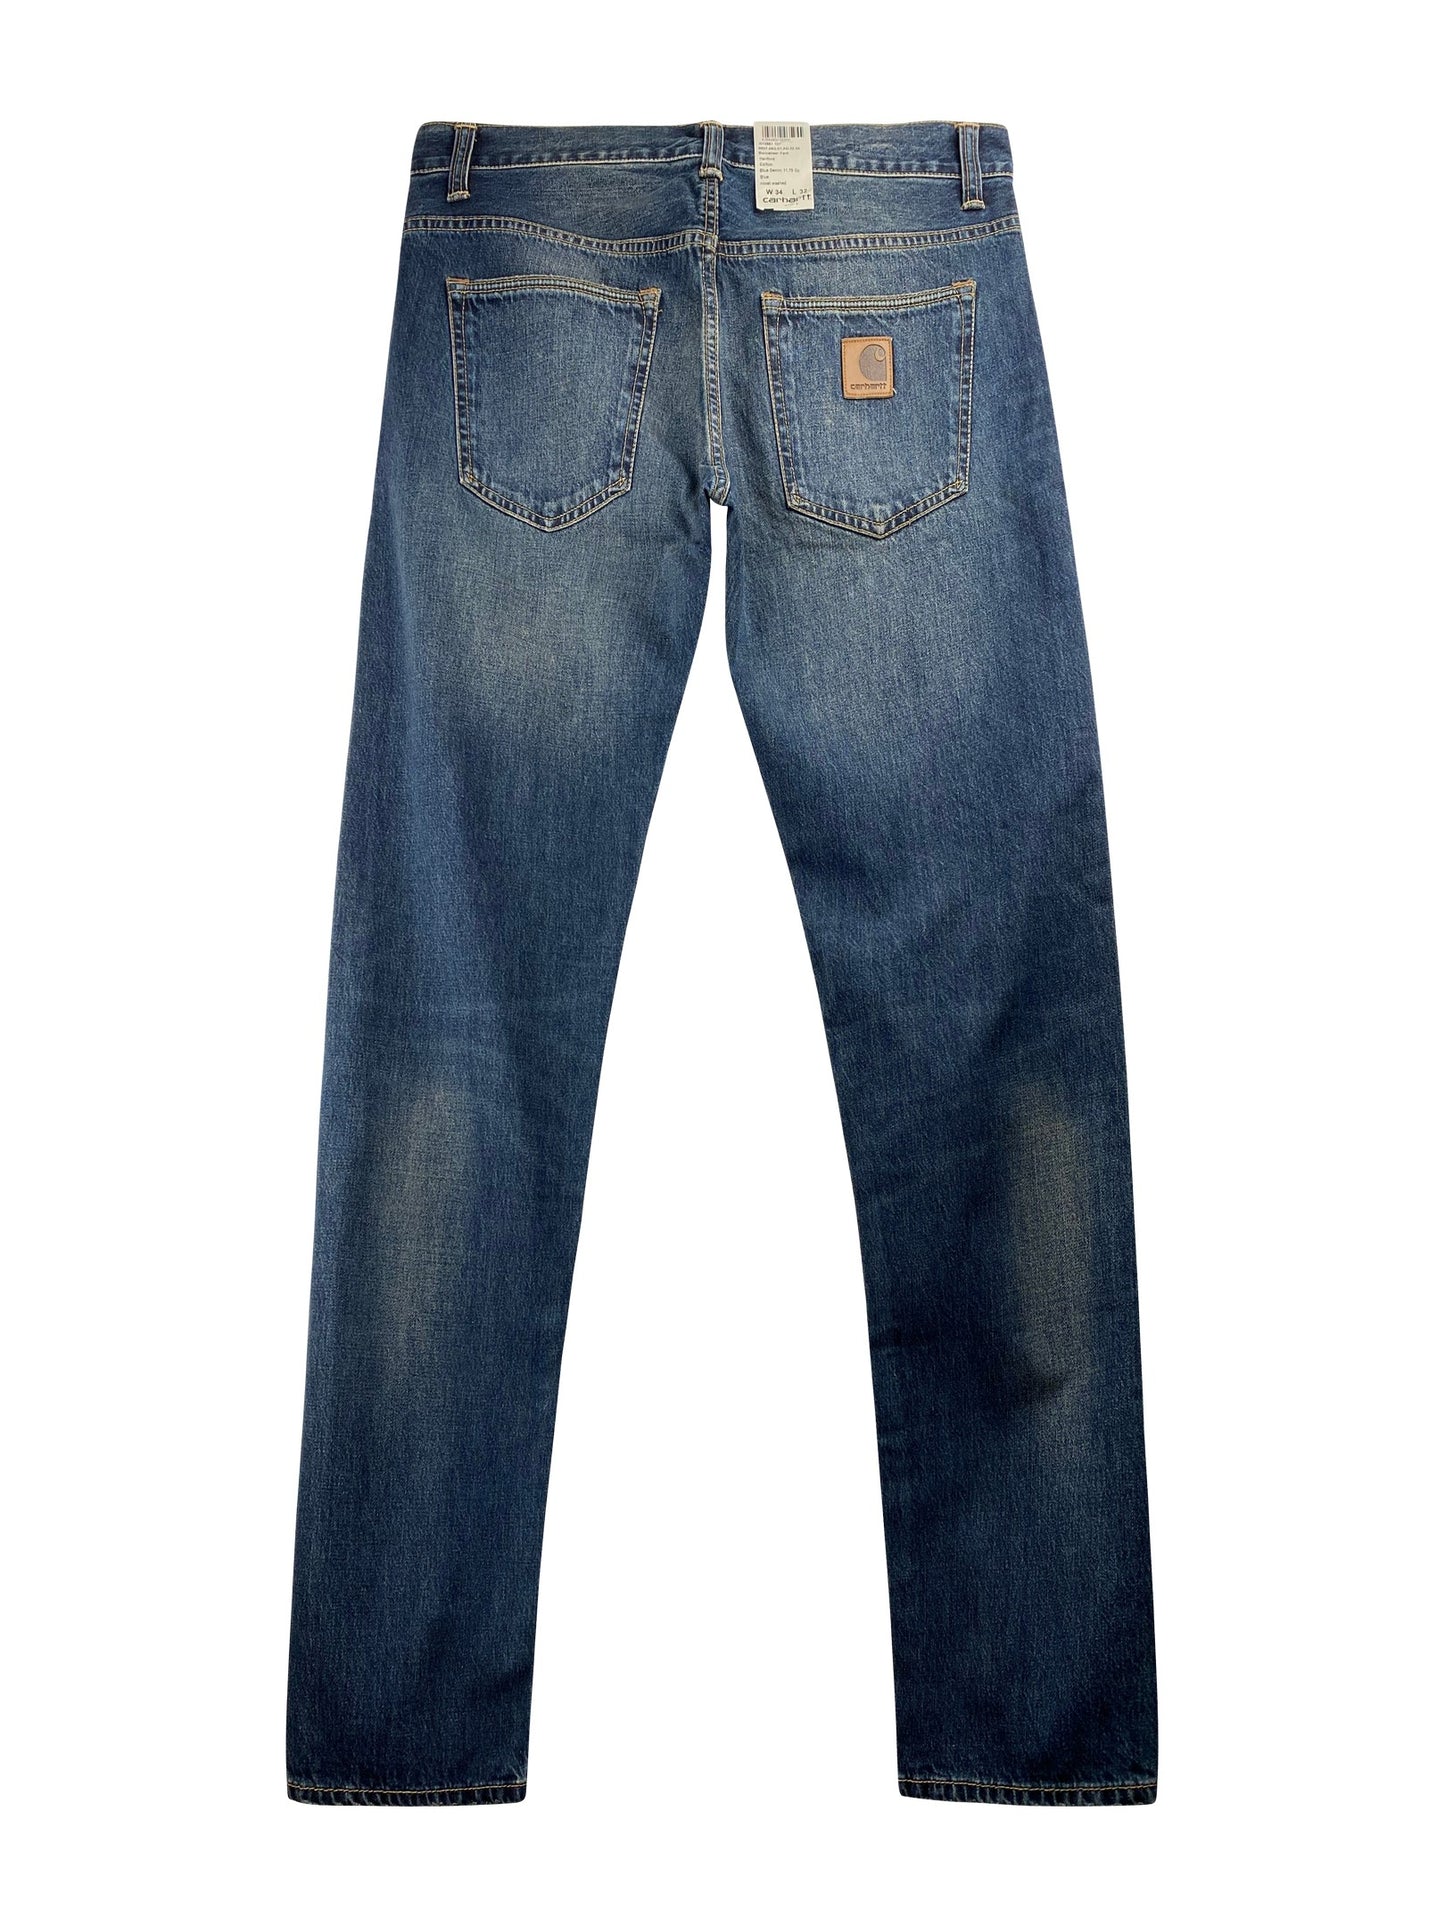 Carhartt Jeans “Klondike Pant II Edgewood” -gravel washed